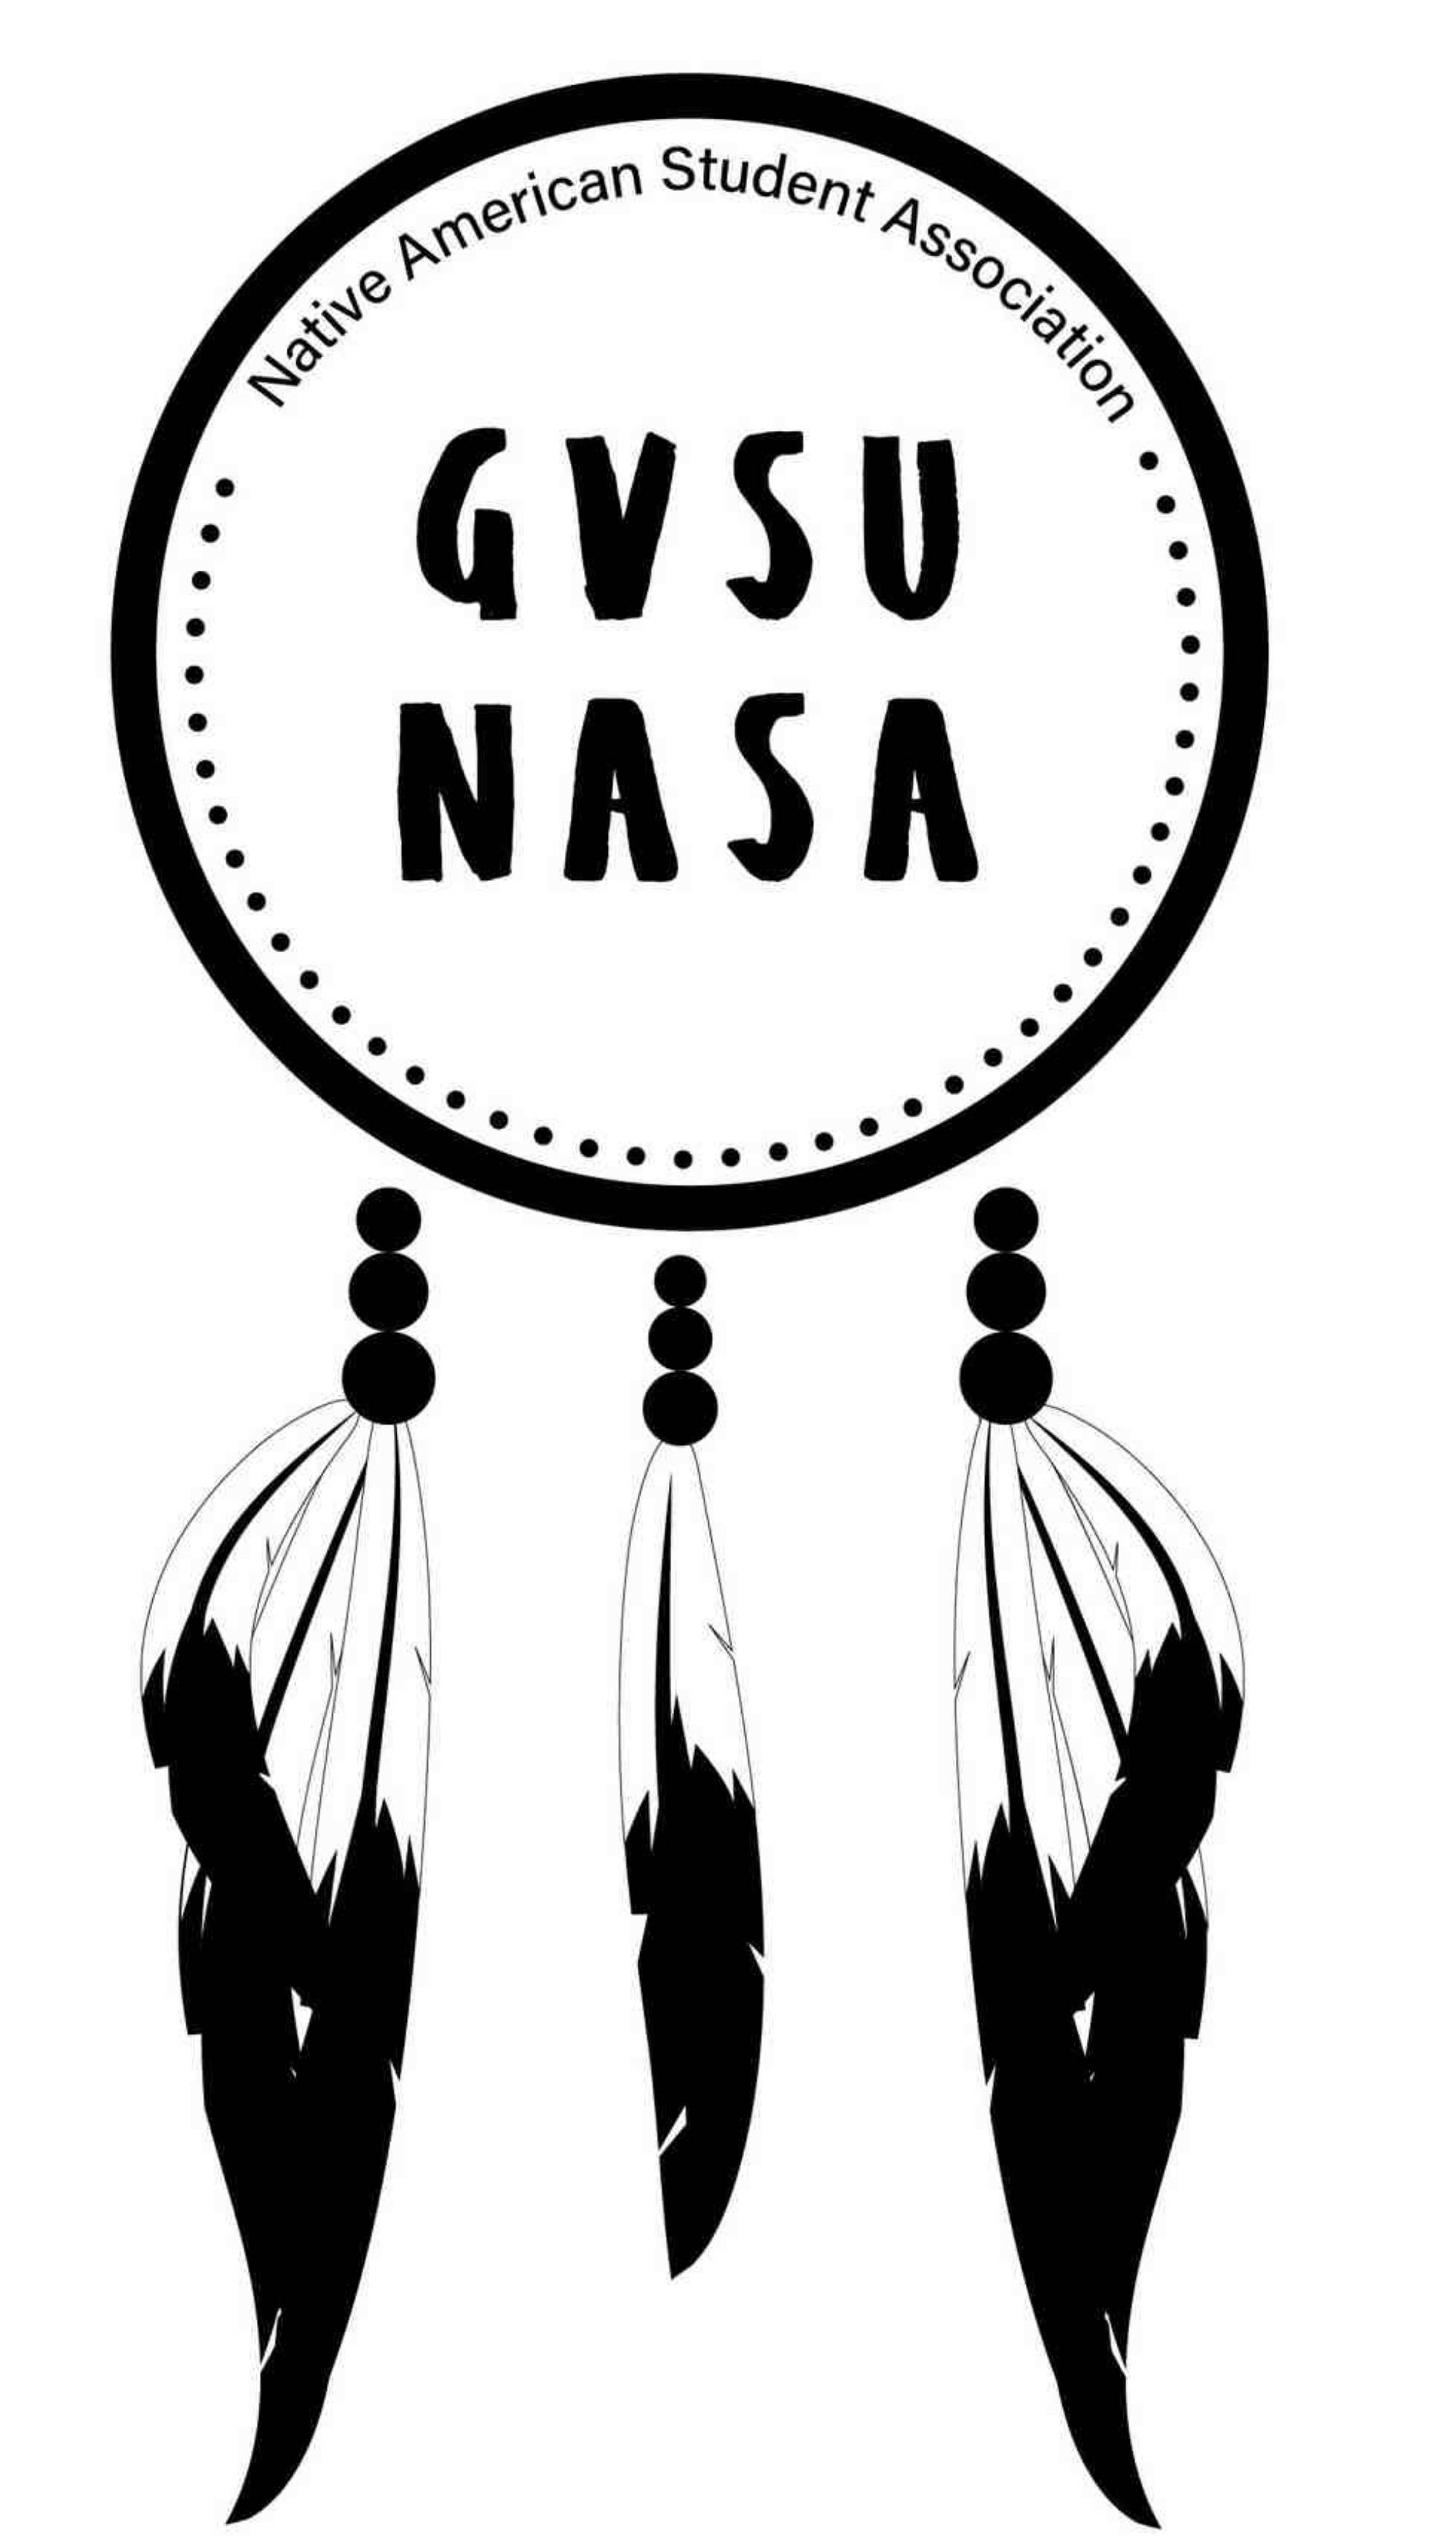 Native American Student Association